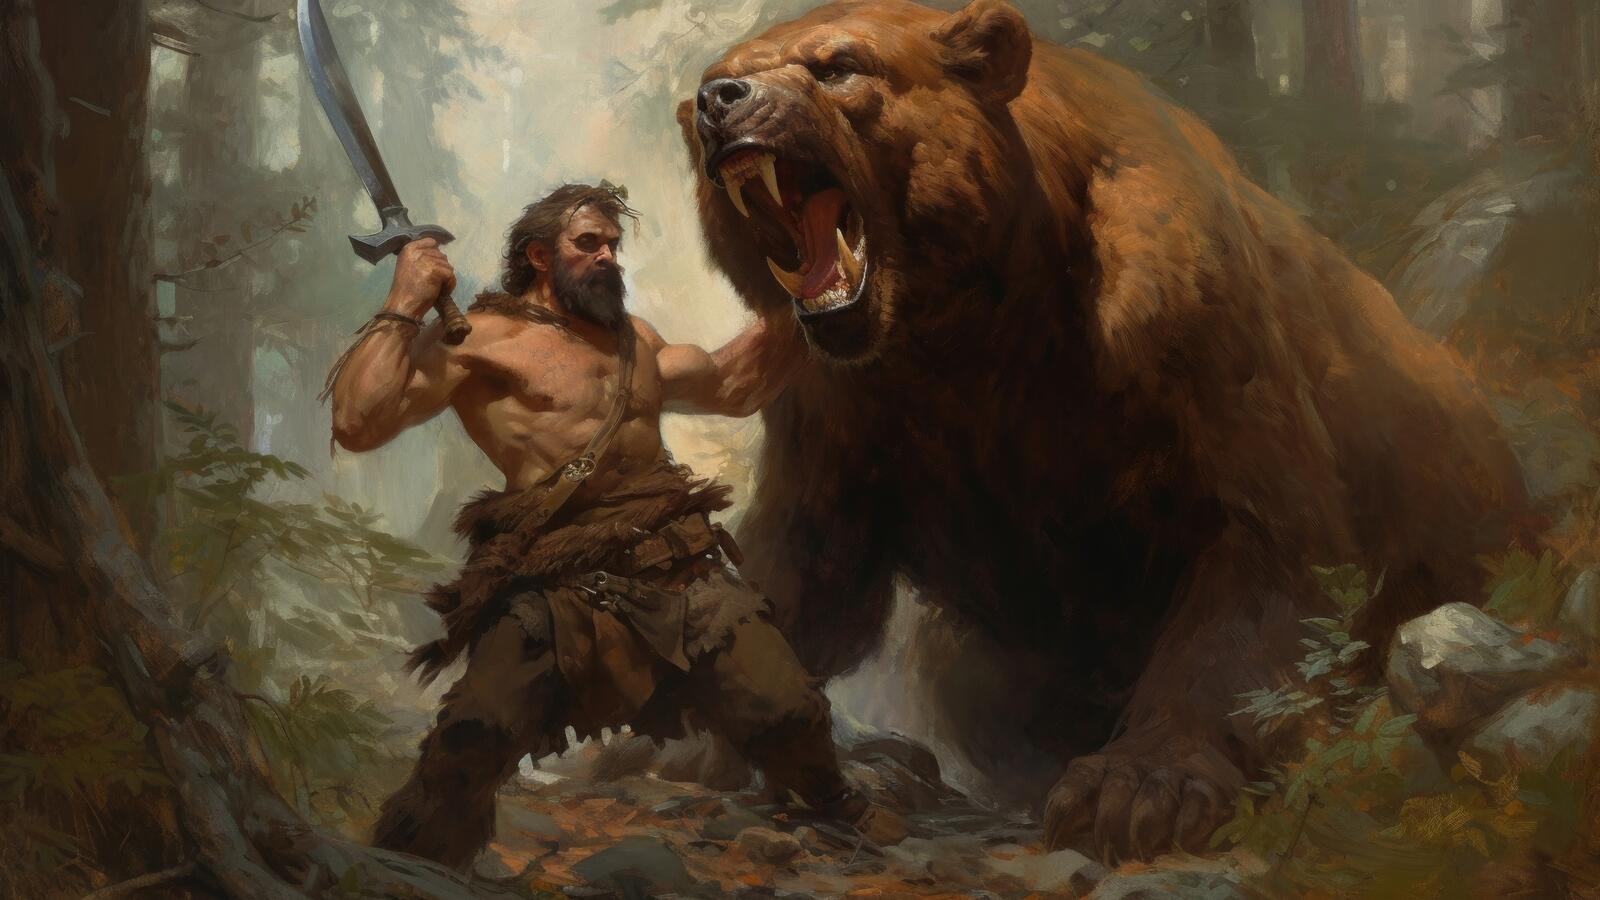 Free photo A warrior with a sword holds back a ferocious bear